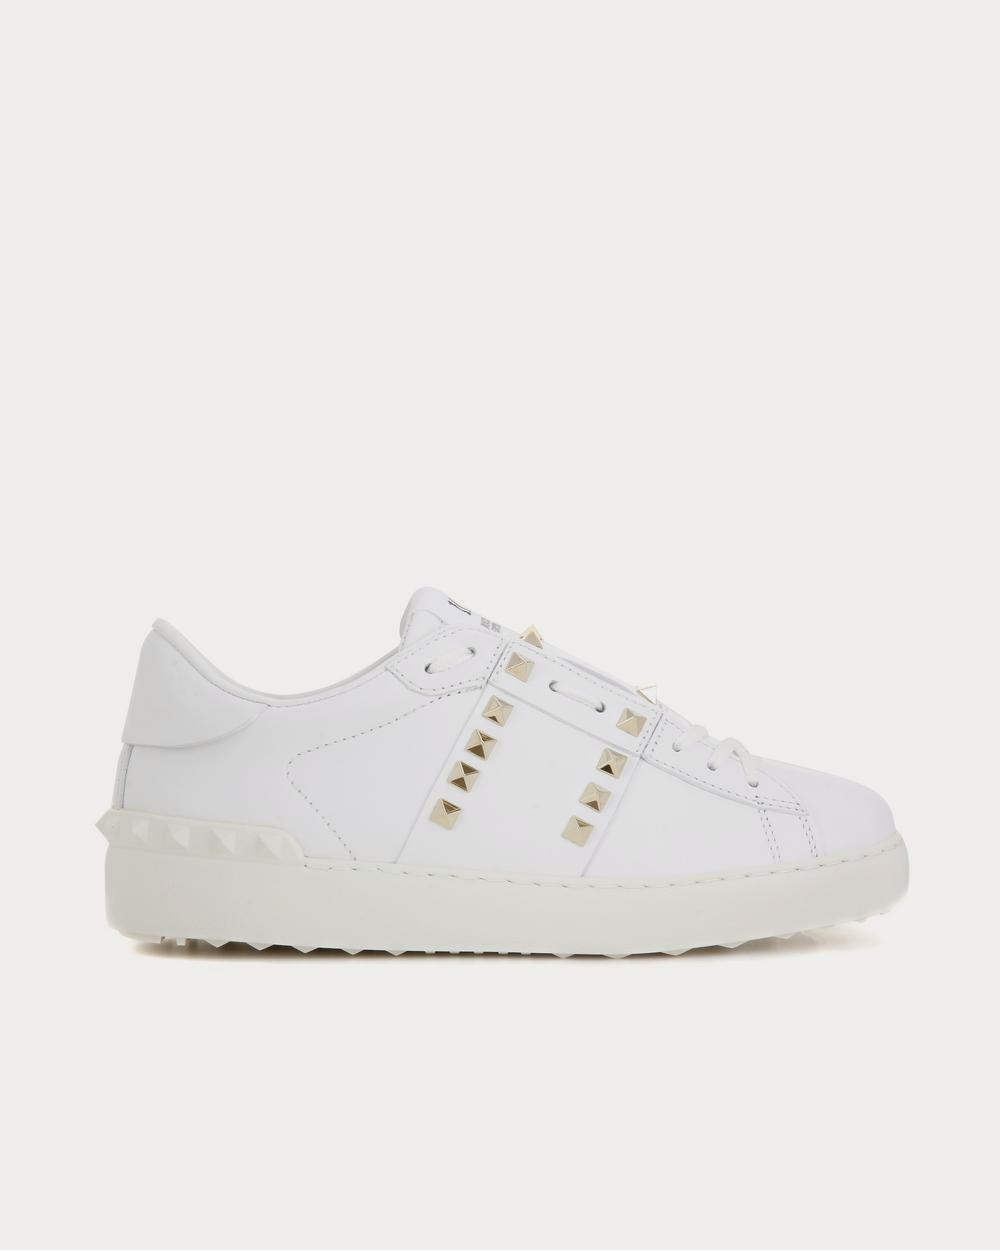 Valentino - Valentino Garavani Rockstud Untitled leather White Low Top Sneakers